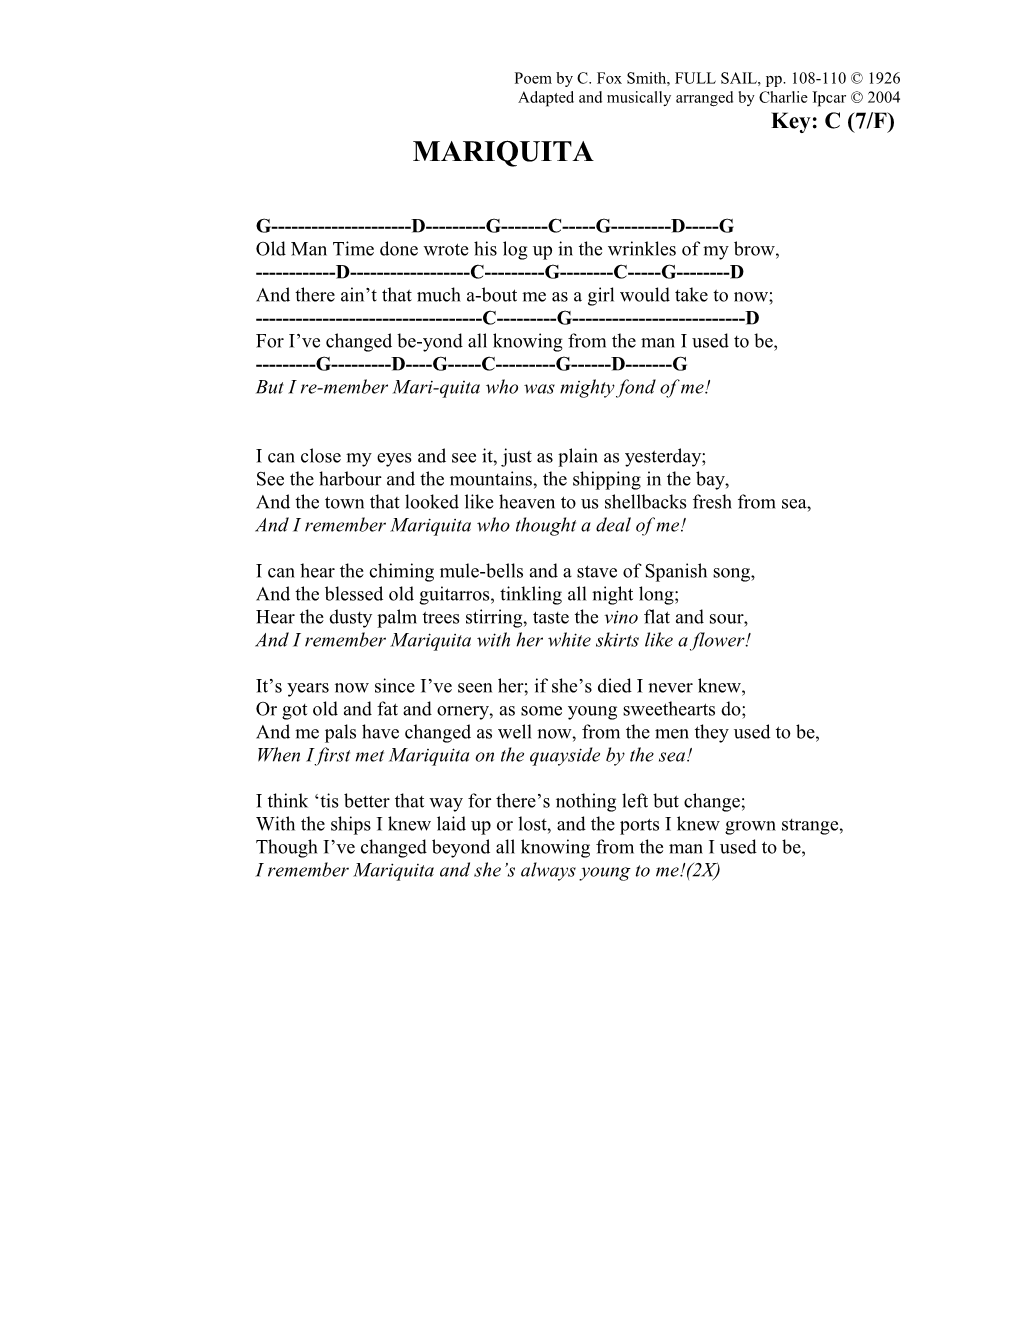 Poem by C. Fox Smith, FULL SAIL, Pp. 108-110 1926